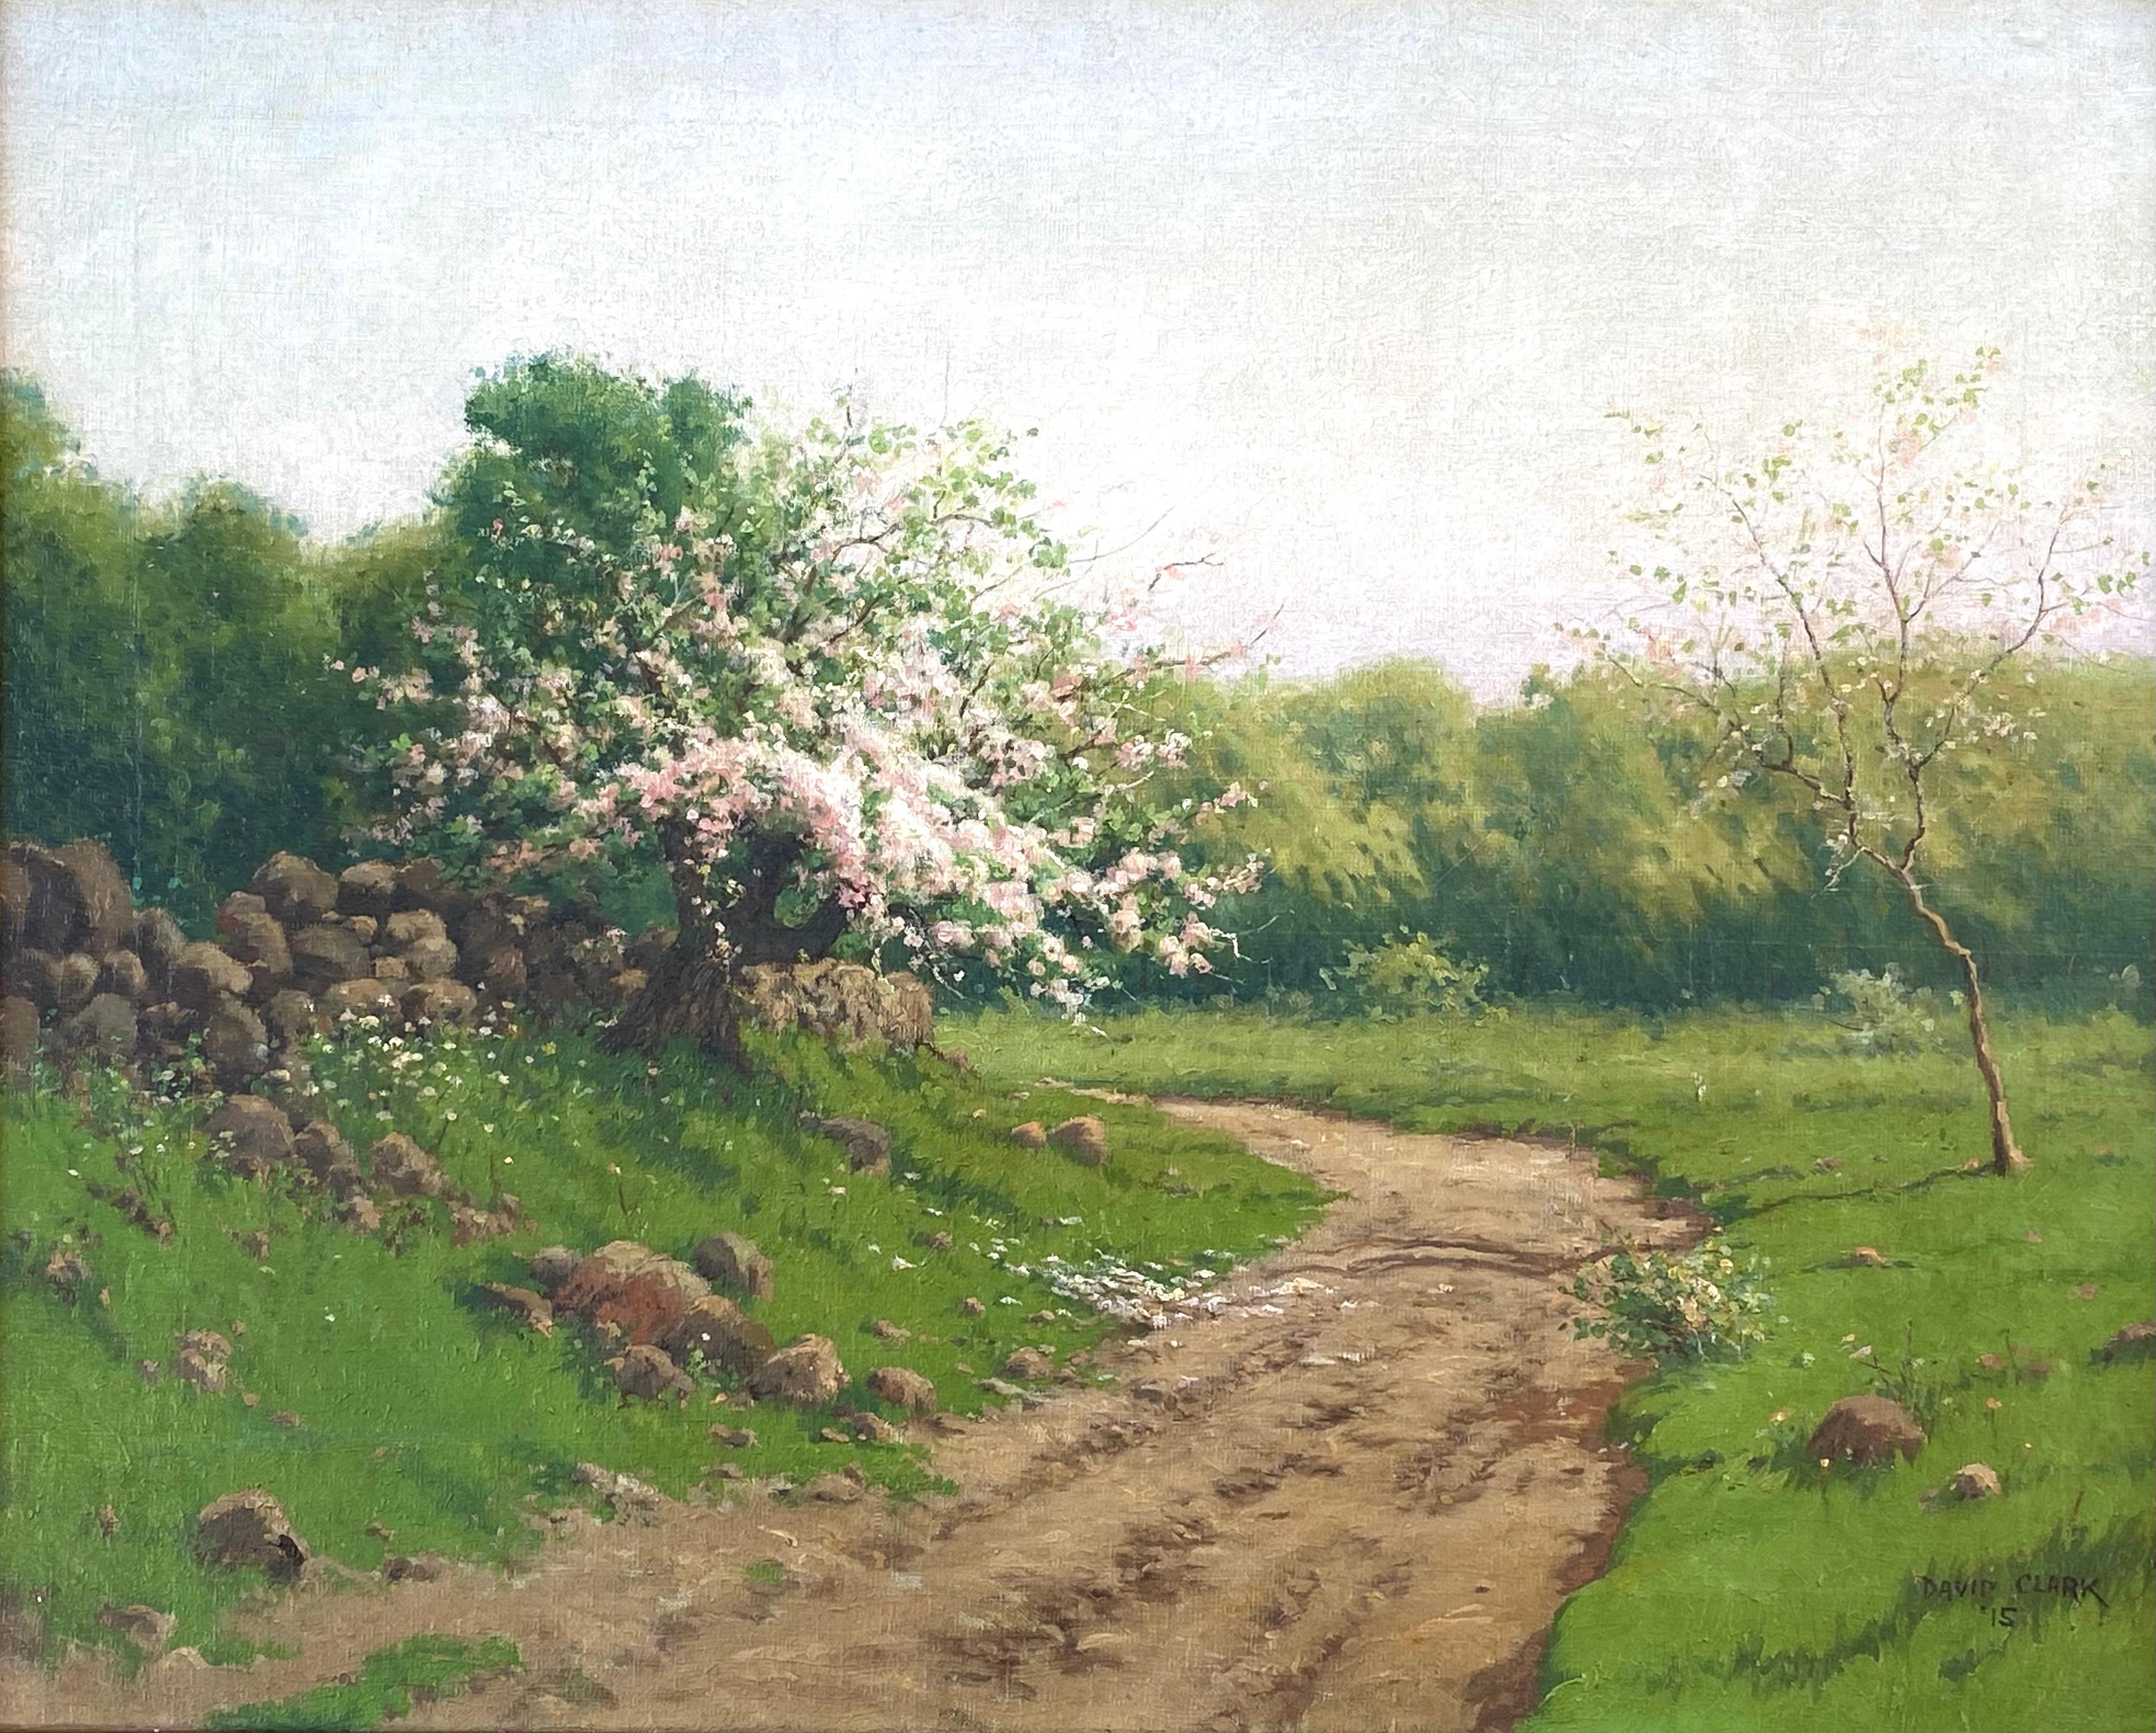 David Clark Landscape Painting - “Apple Blossom Time”